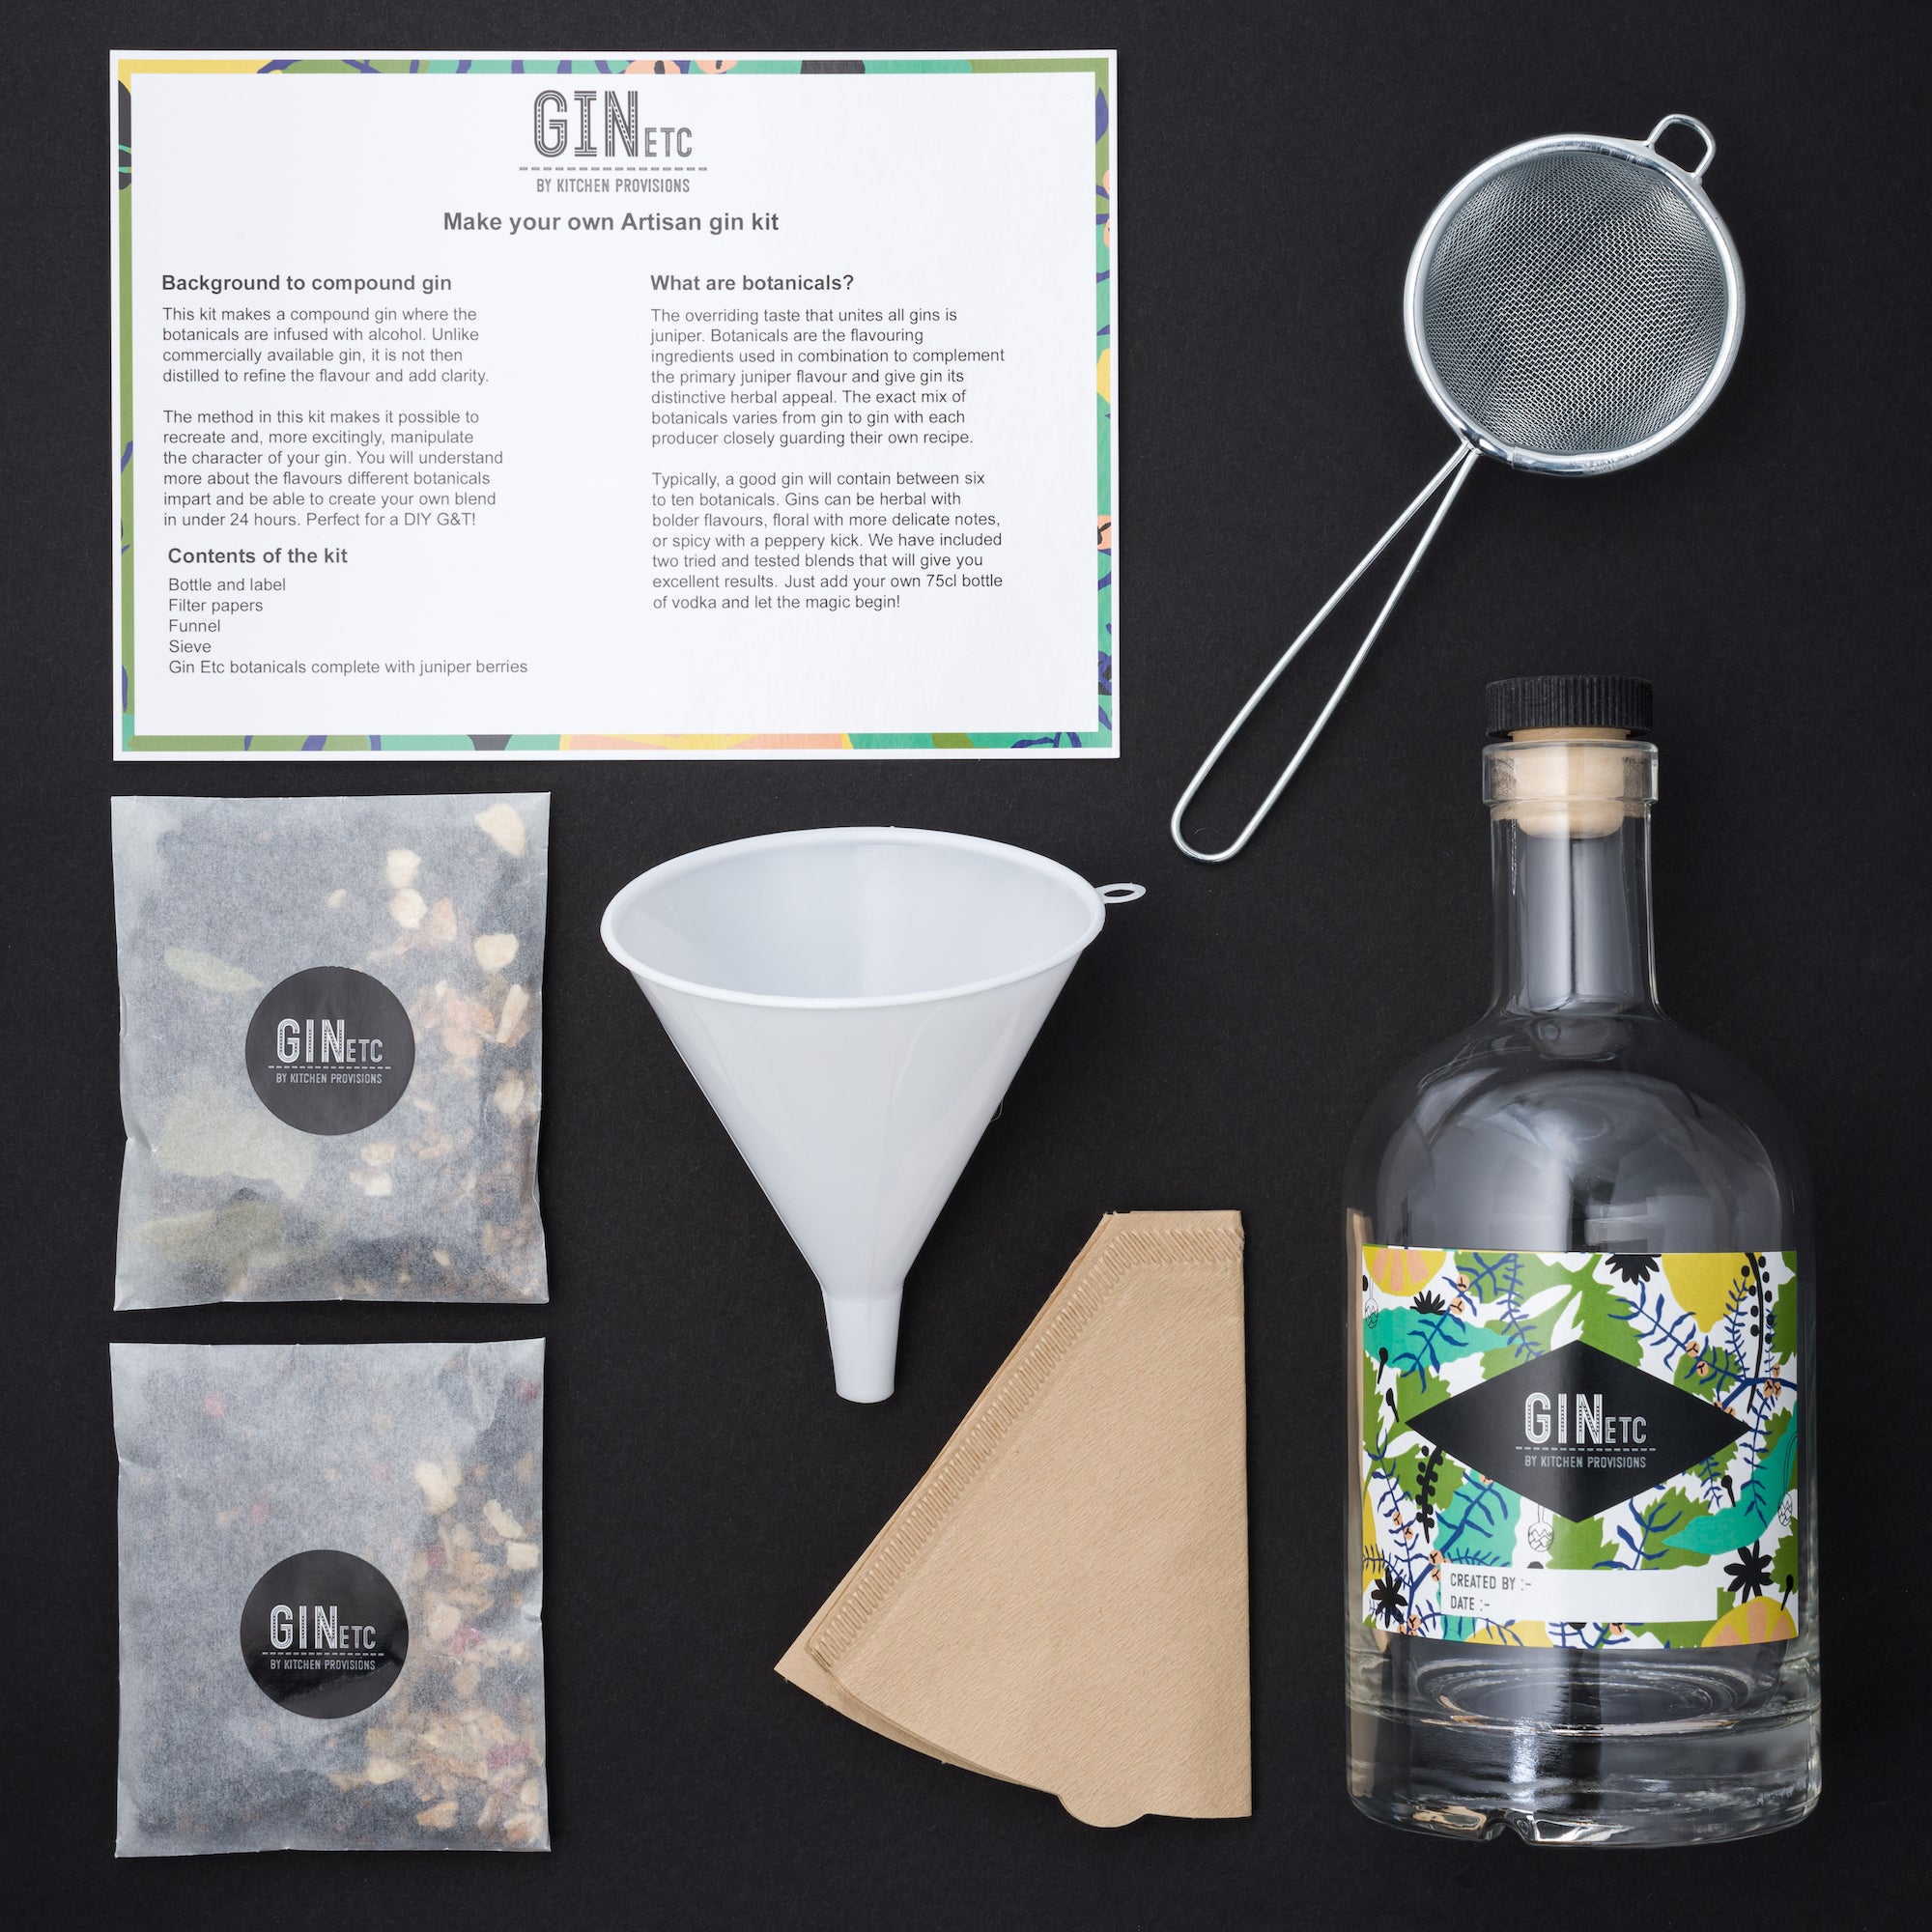 Gin Etc. Gin Maker's Kit - The Artisan Create your own Blended Gin